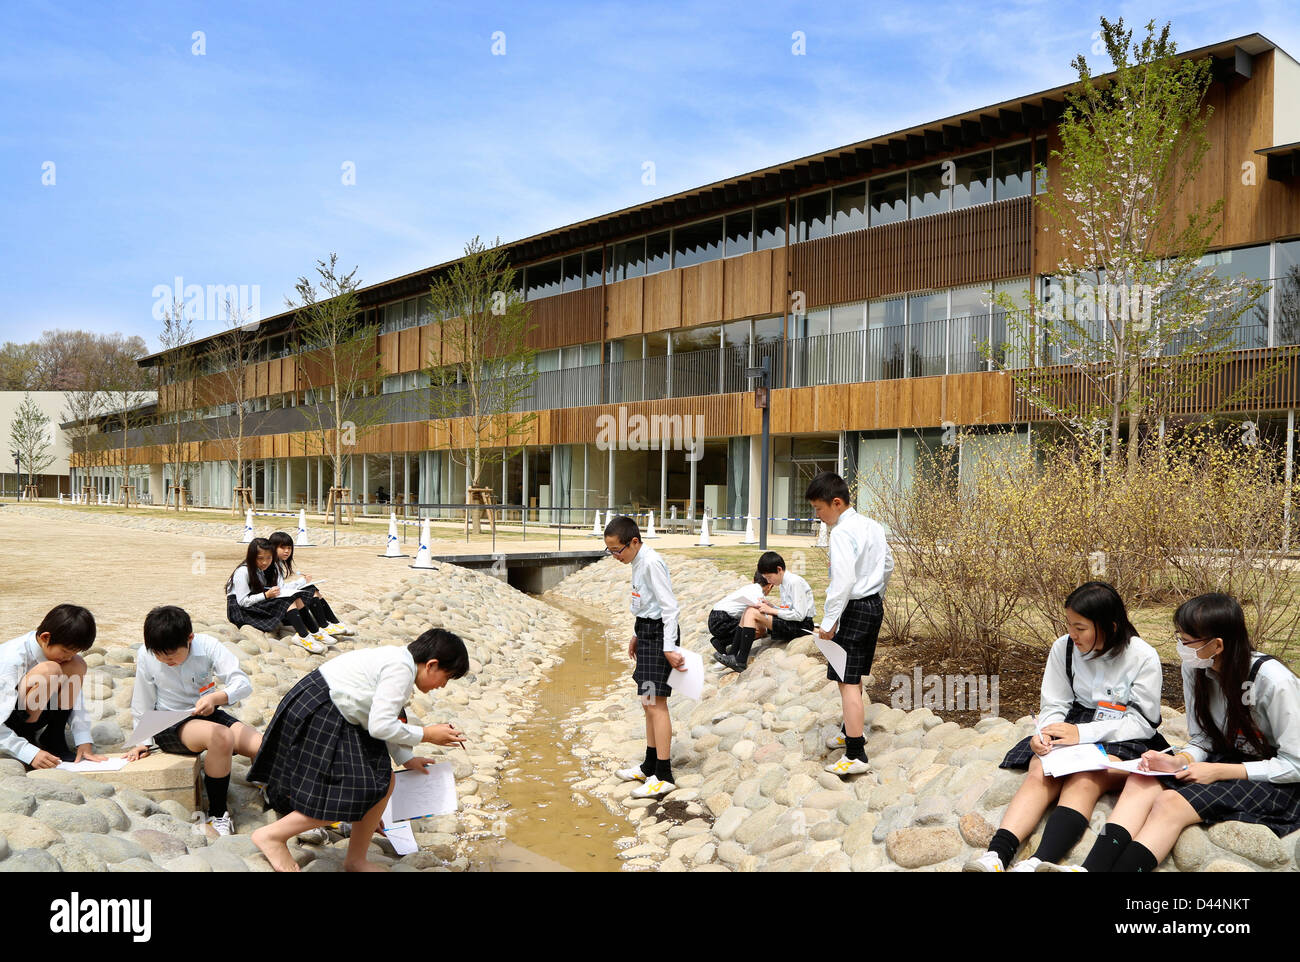 Teikyo University Elementary School, Tokyo, Japan. Architect: Kengo Kuma, 2012. Overall exterior view during biology field work. Stock Photo